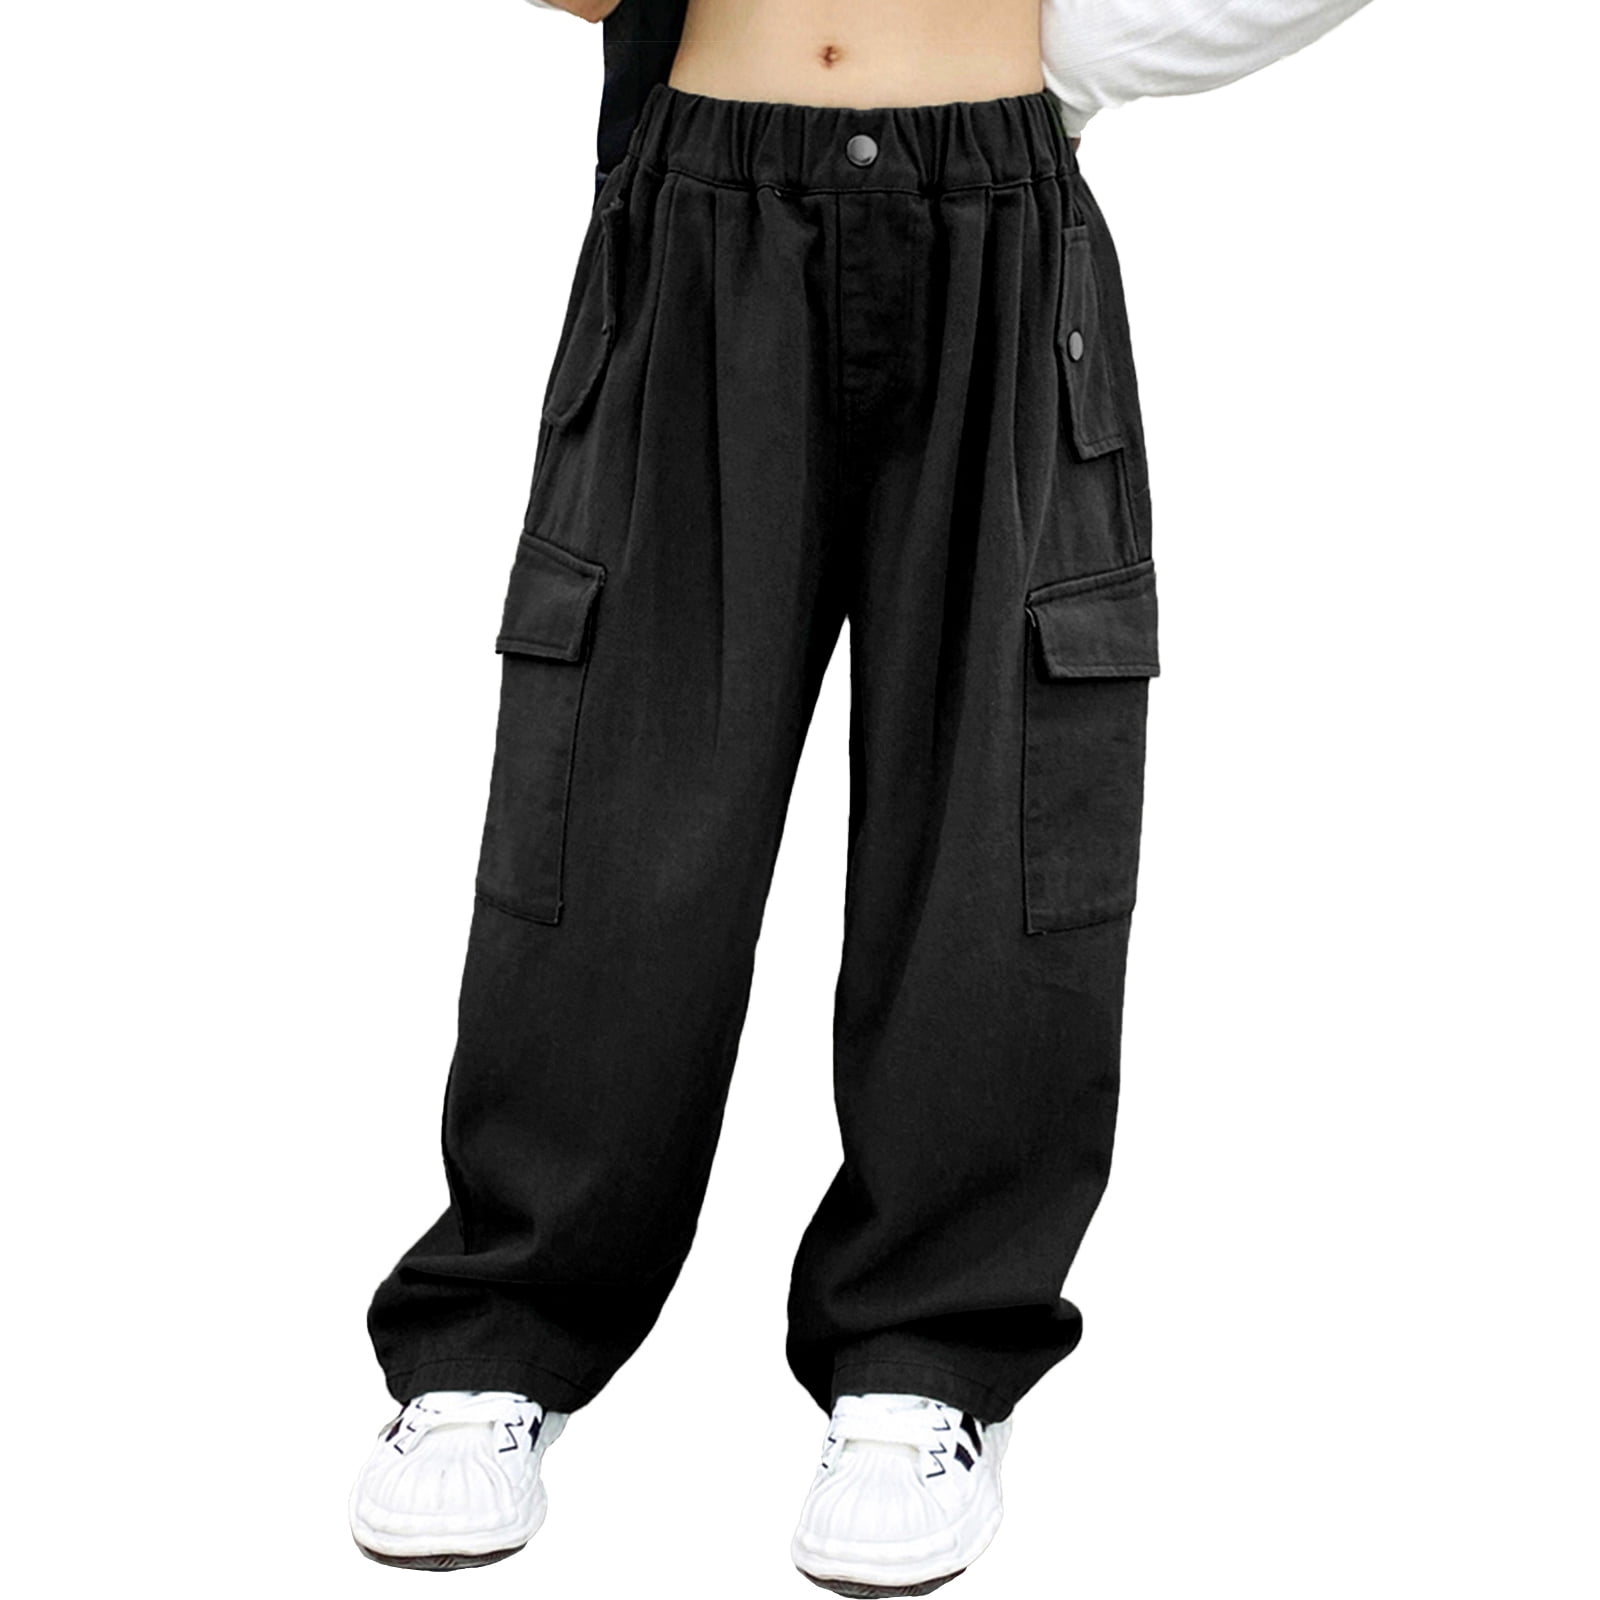 Buy Yagan Women's & Girls' High Waist Korean Baggy Pants Beige at Amazon.in